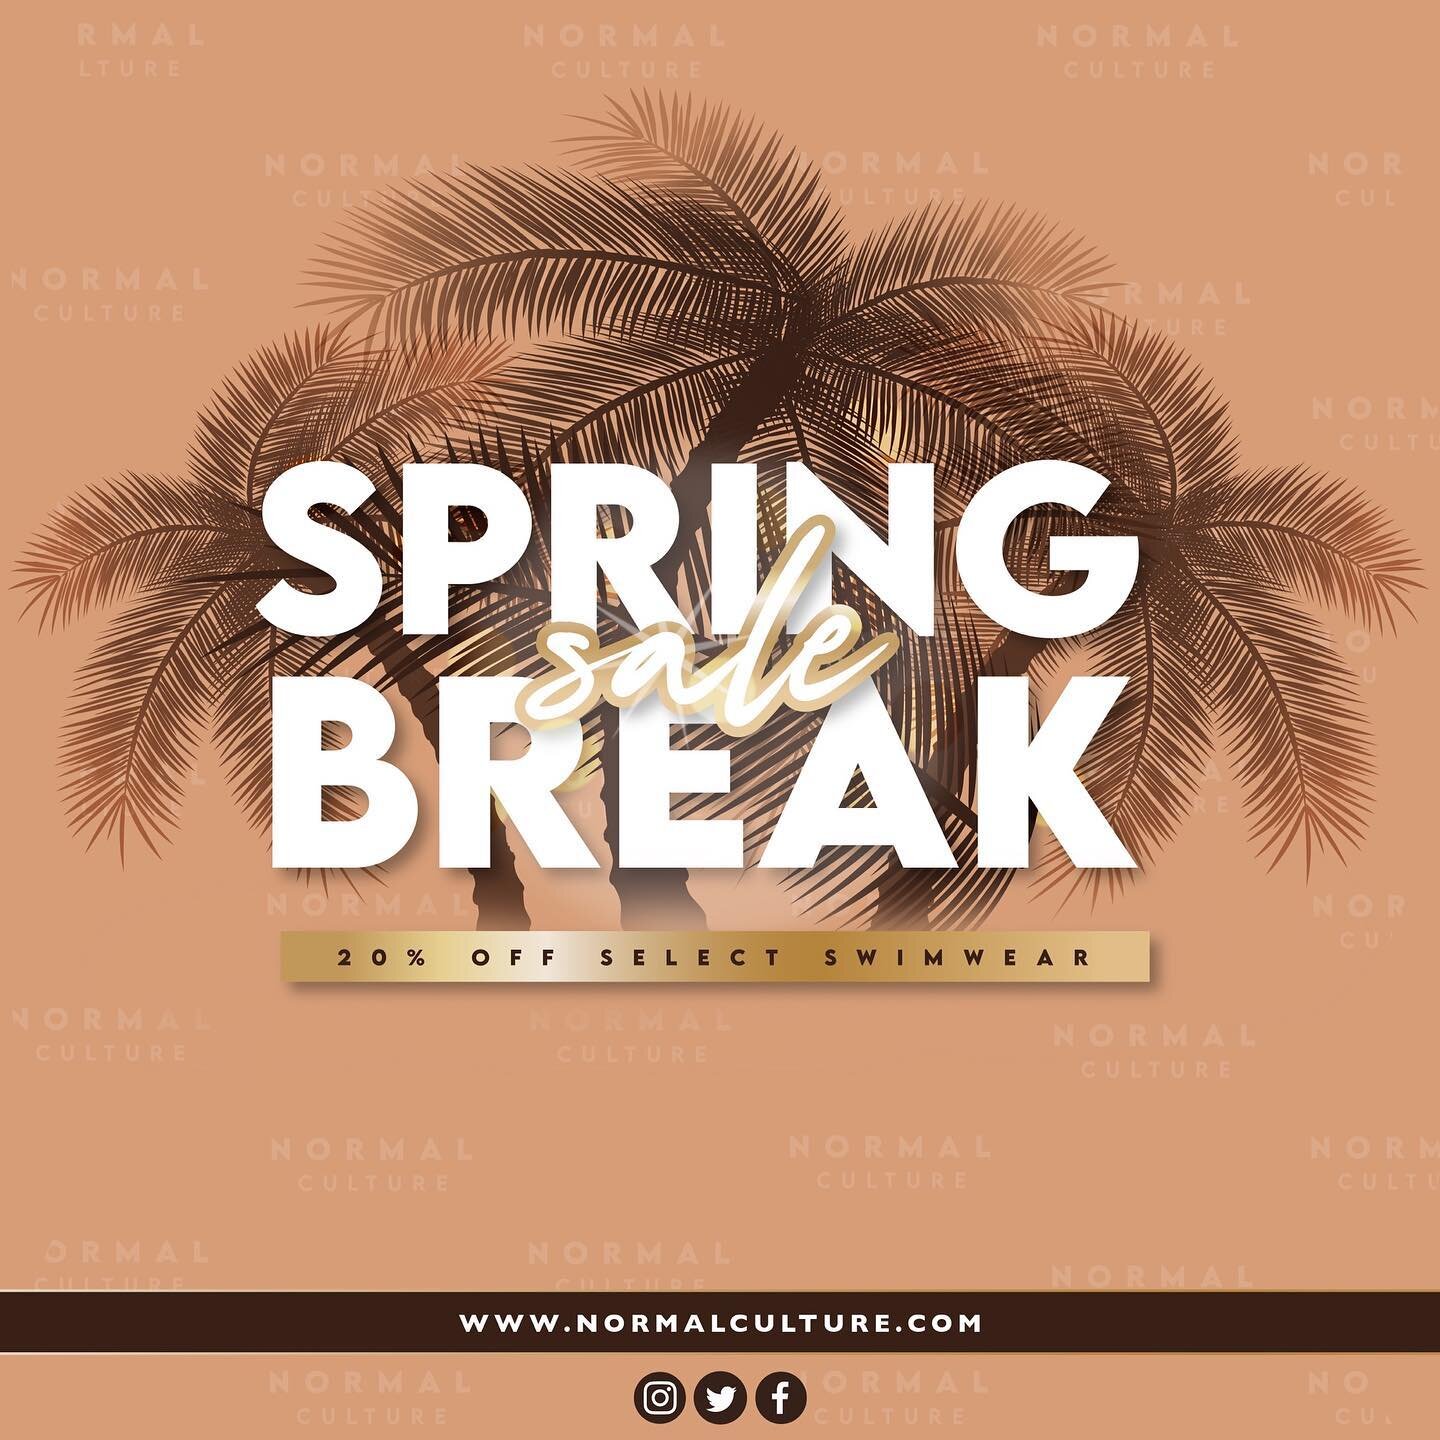 Spring break sale! 20% off
Purchase one and get a surprise bikini FREE
#swimwear #springbreak #bogo #explorepage